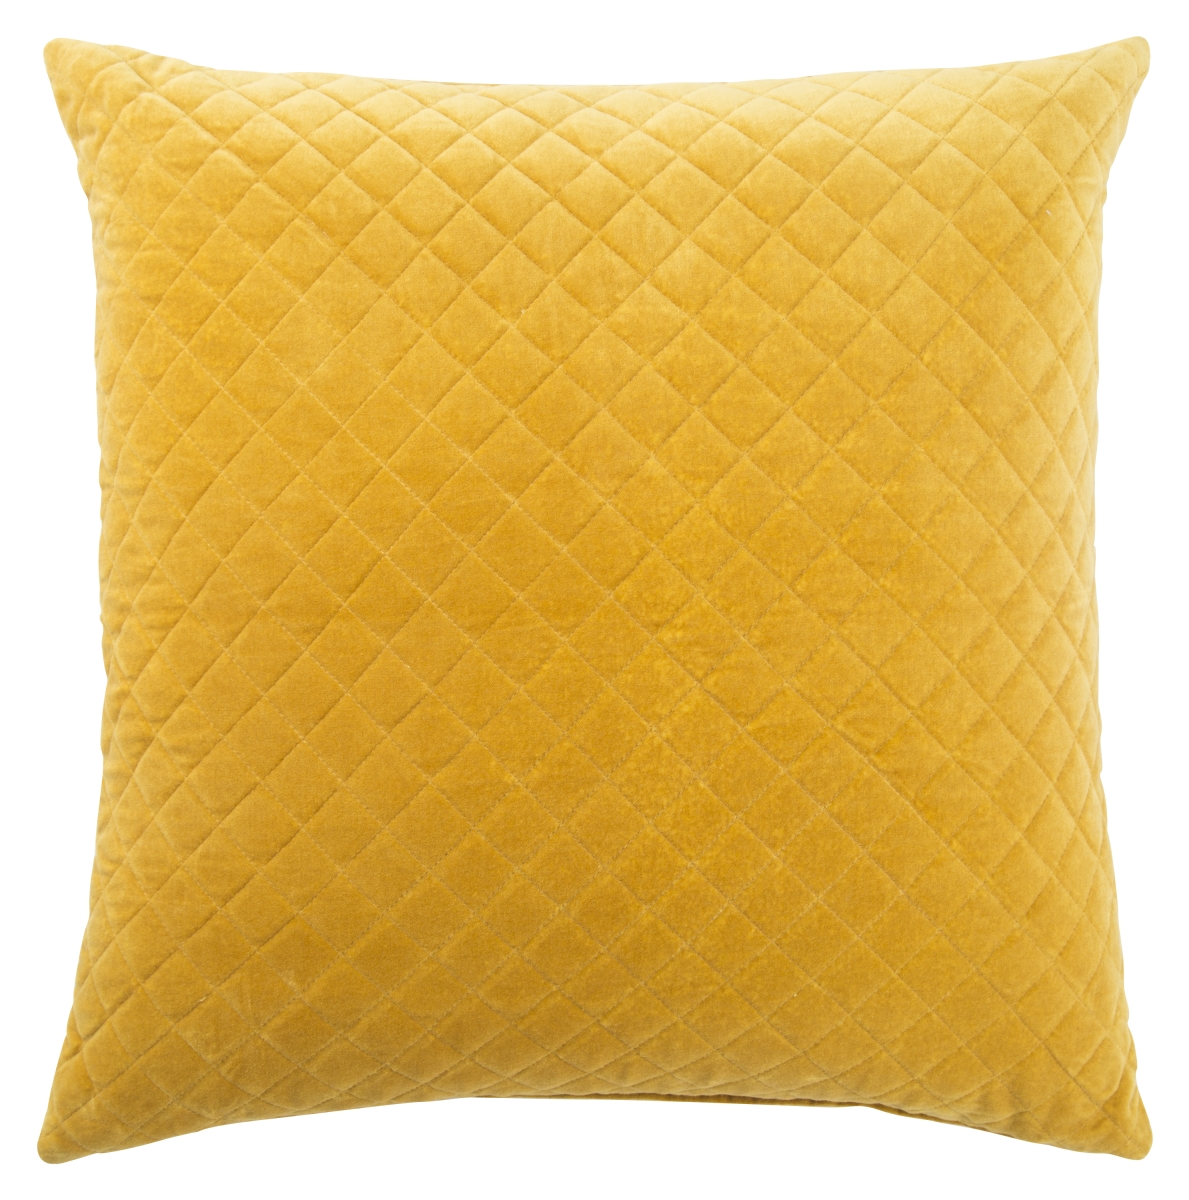 Plw102198 22 X 22 In. Lavish Pillows Posh Yellow Solid Poly Throw Pillow